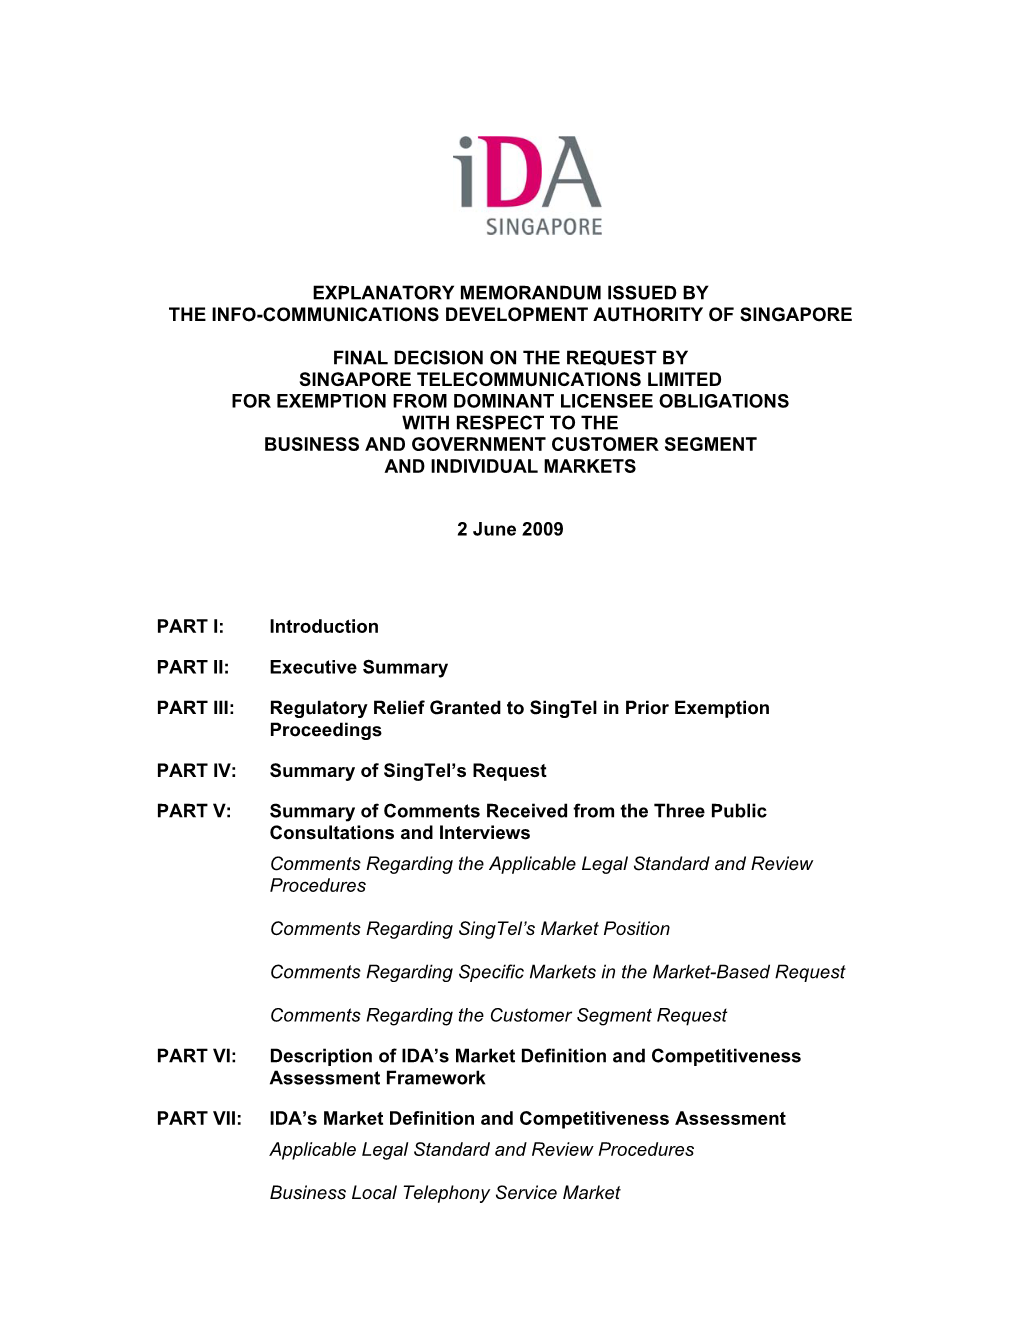 Explanatory Memorandum Issued by the Info-Communications Development Authority of Singapore